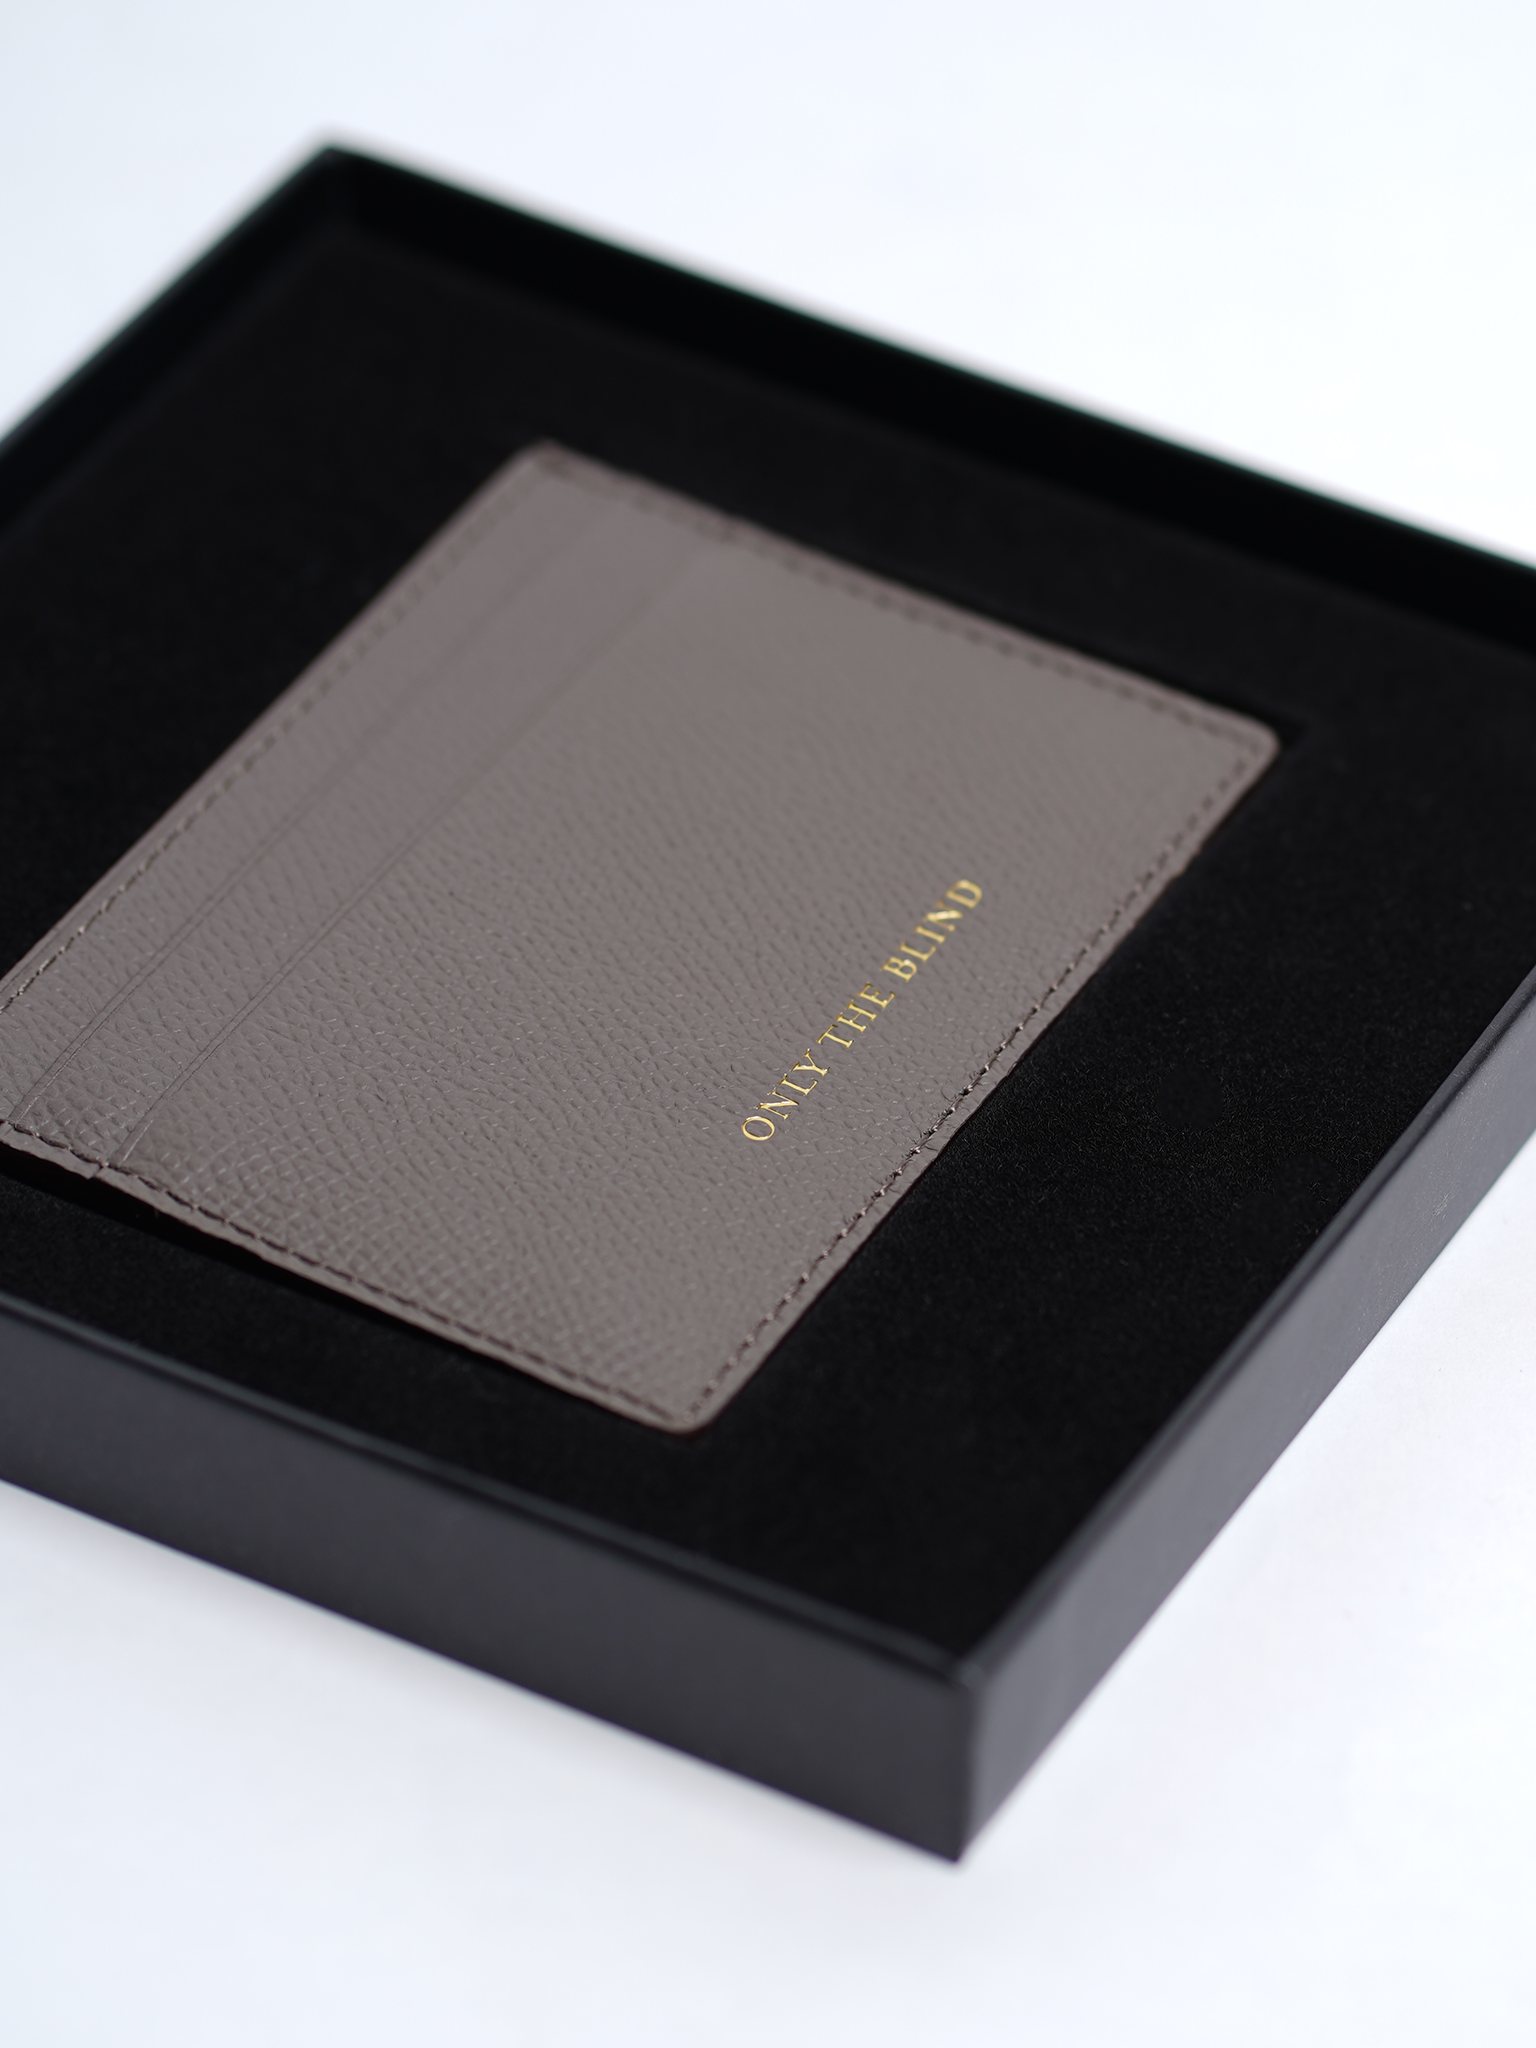 Epsom Leather Debossed Card Holder - Stone